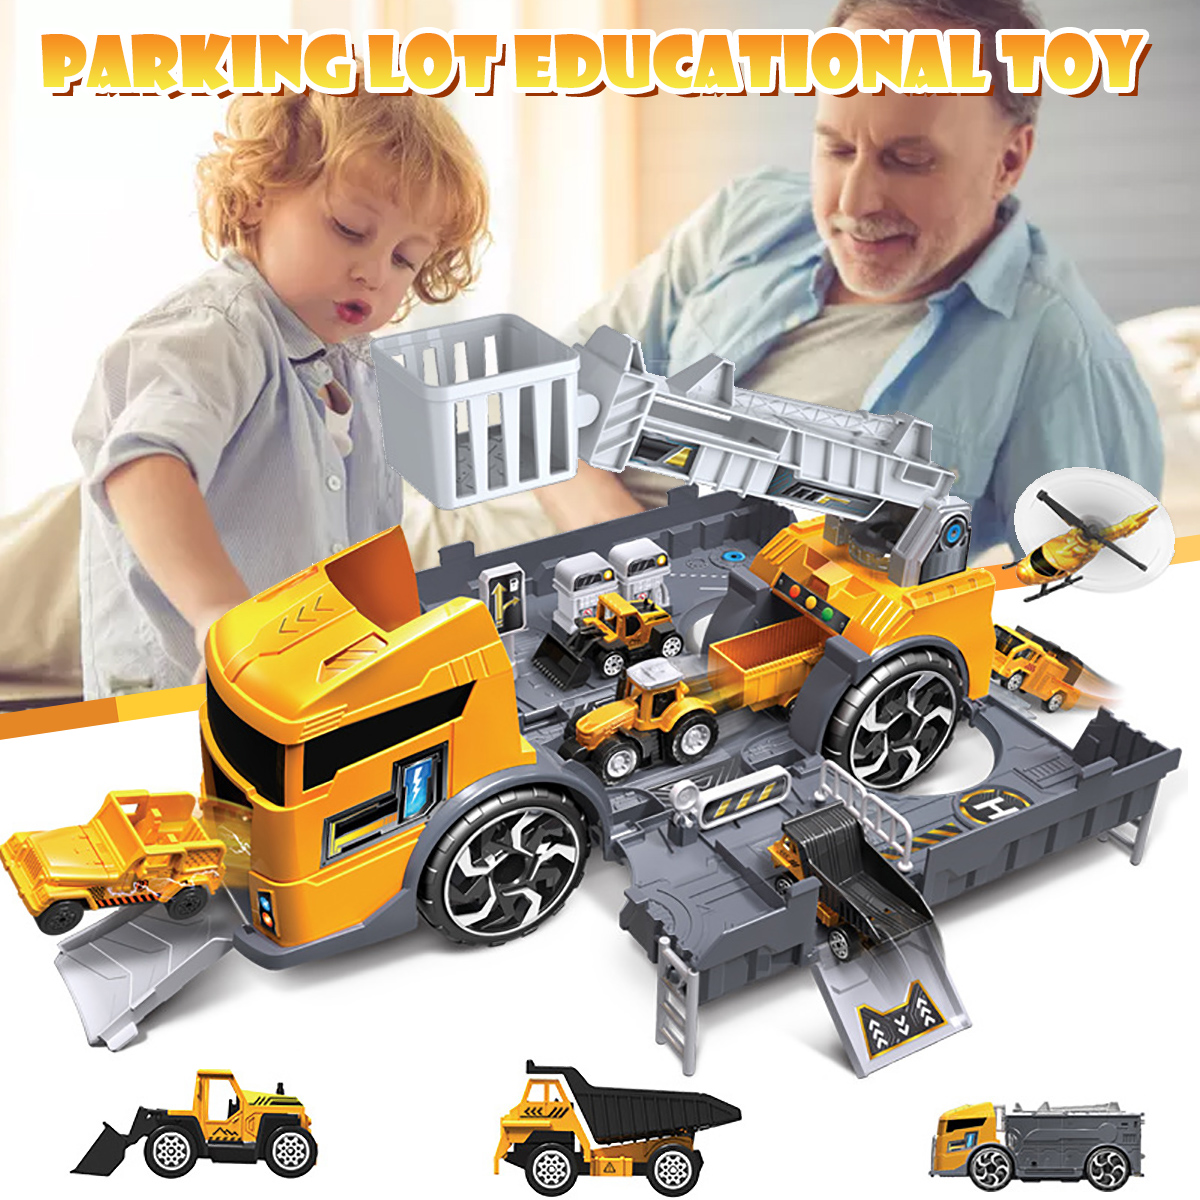 Childrens-Simulation-Diecast-Engineering-Vehicle-Model-Set-Deformation-Storage-Parking-Lot-Education-1555038-8